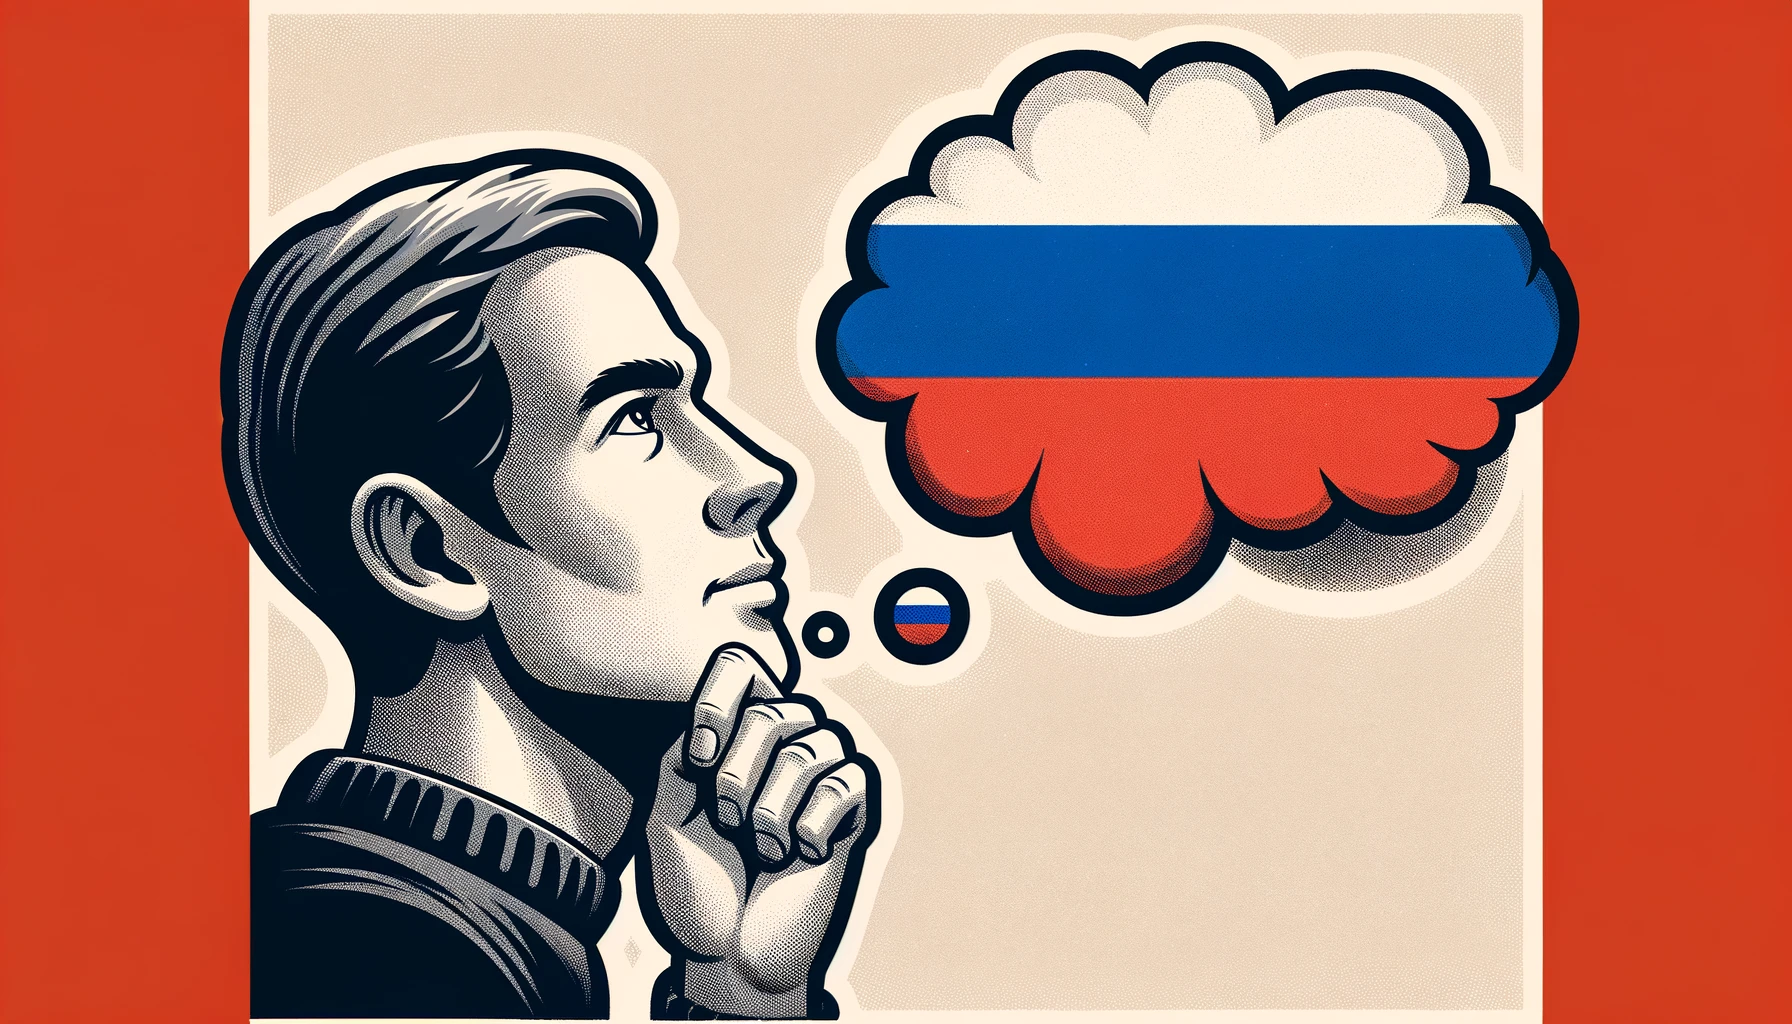 Aprender russo rapido aprender russo,aprender russo rápido,segredo,troika idiomas